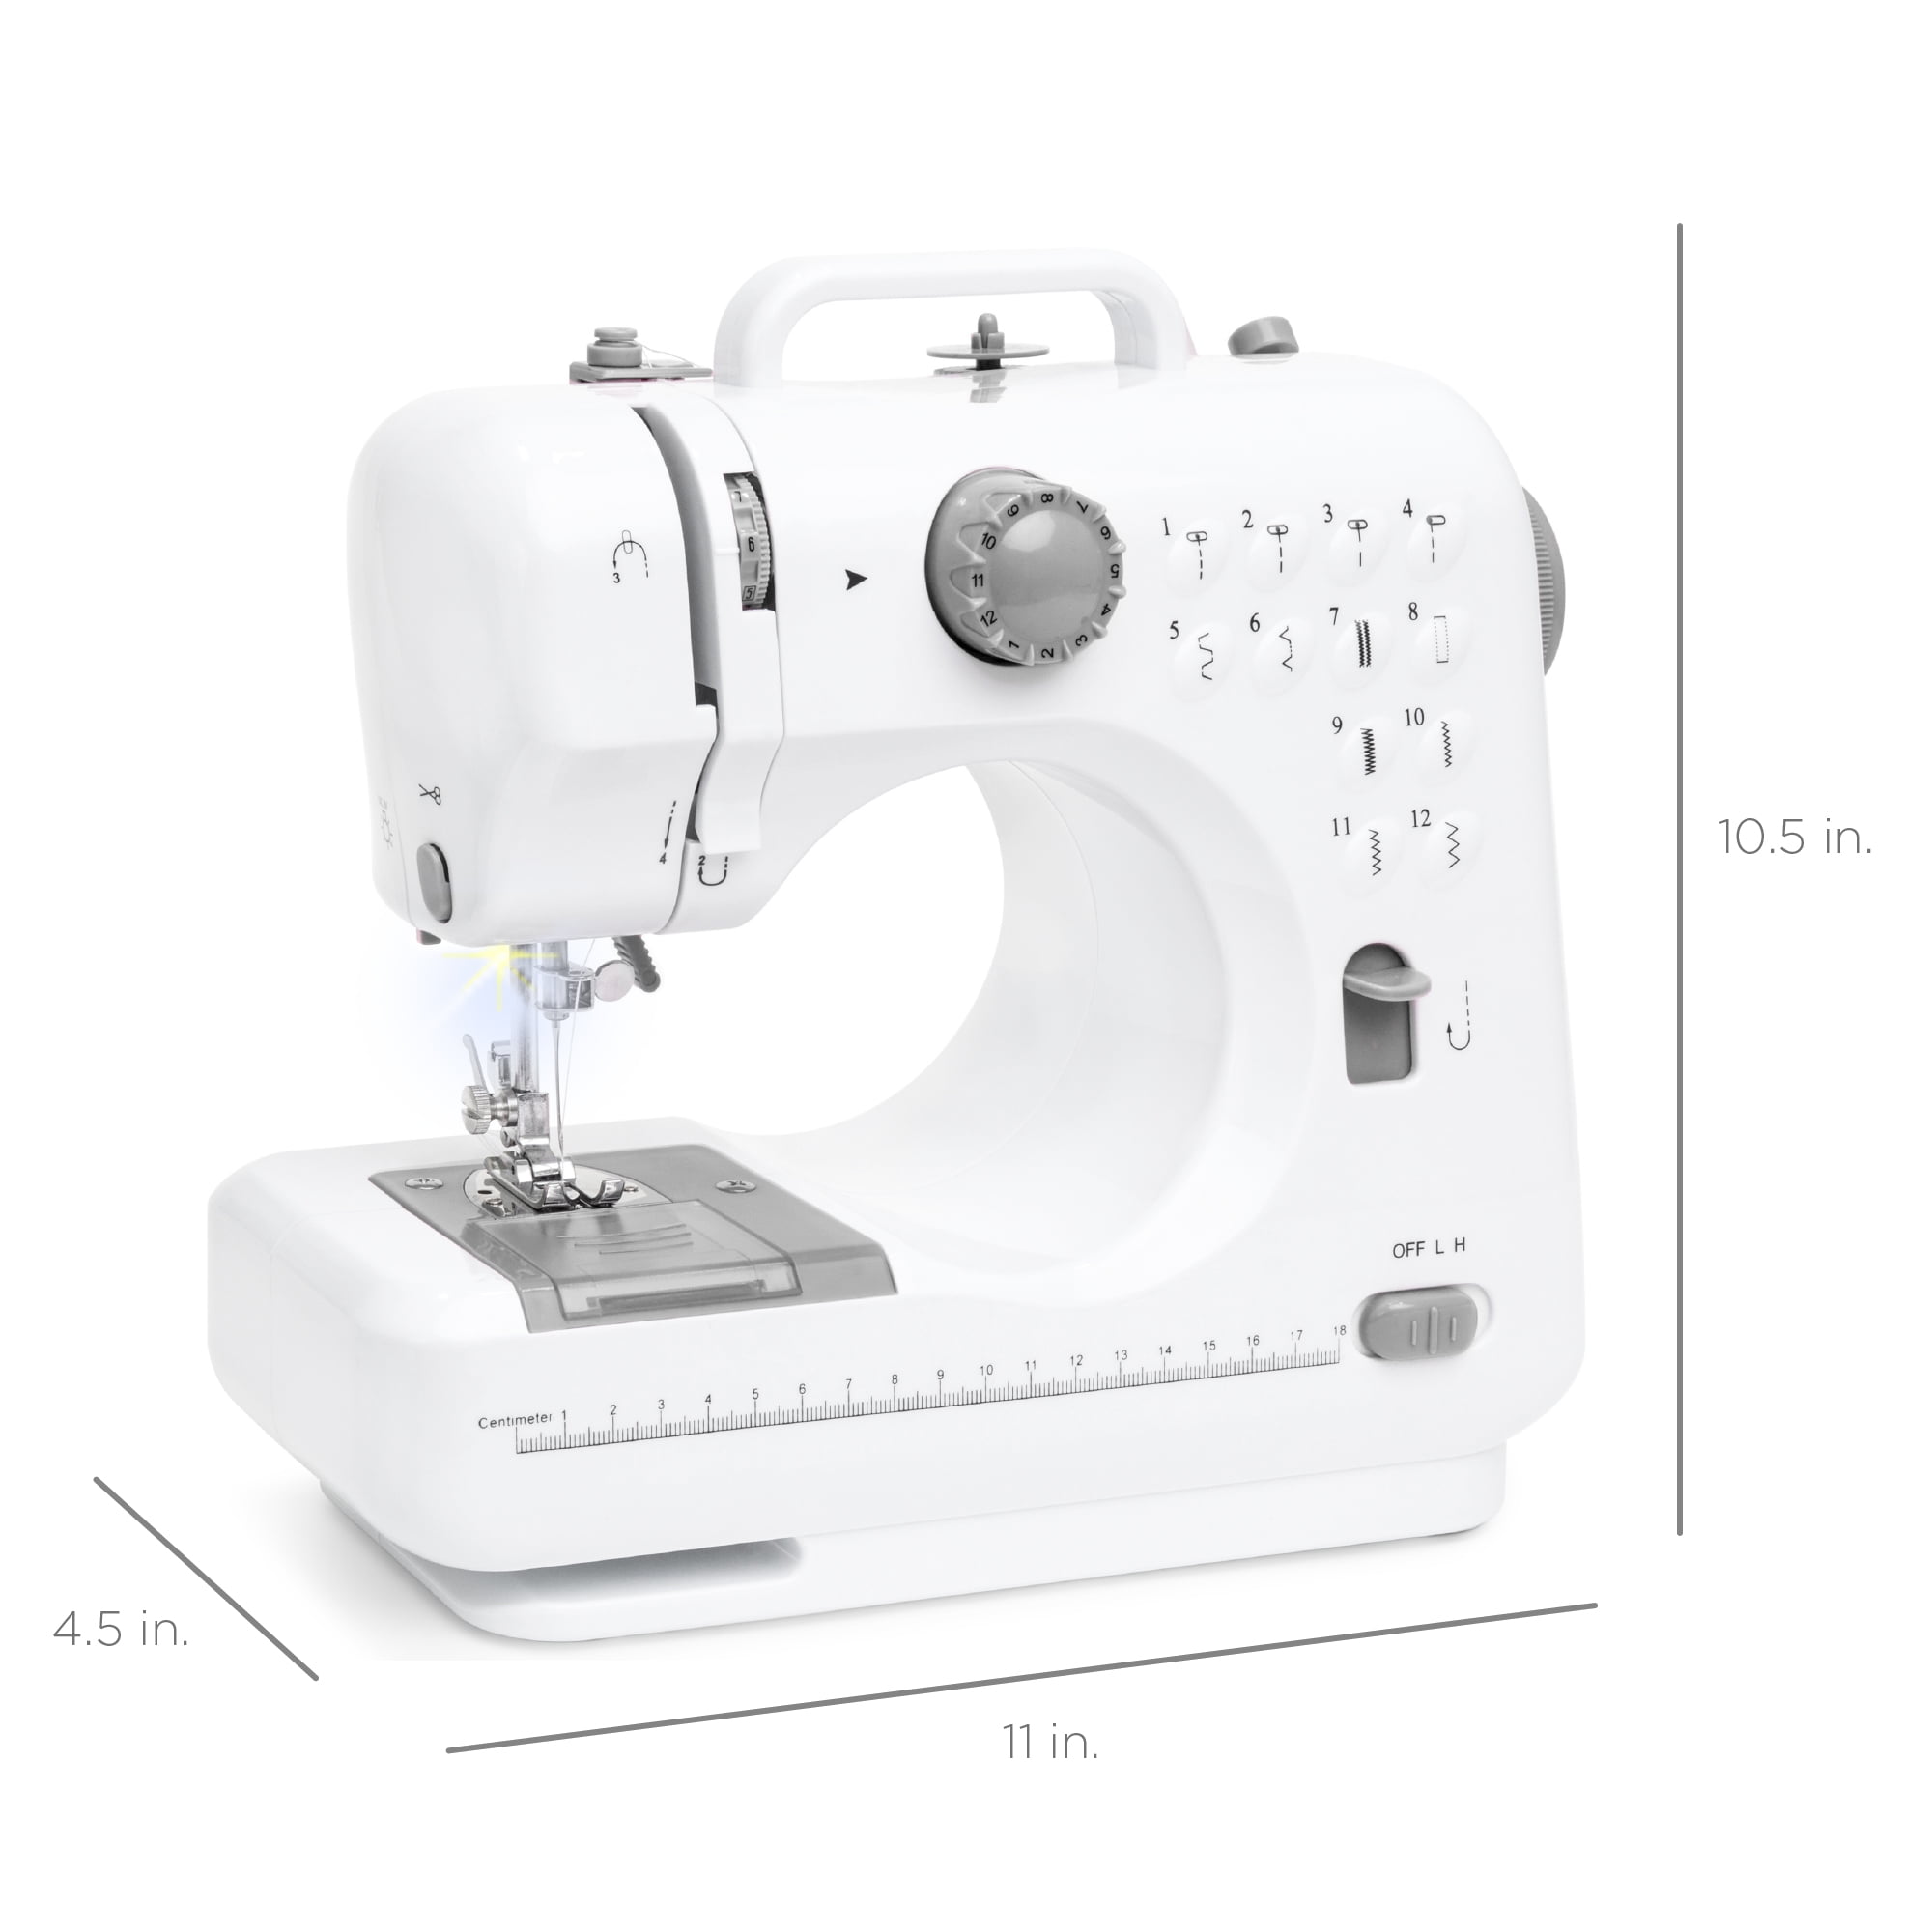 Basic Sewing Bundle (101, 102 & 103) – The Sewing Station